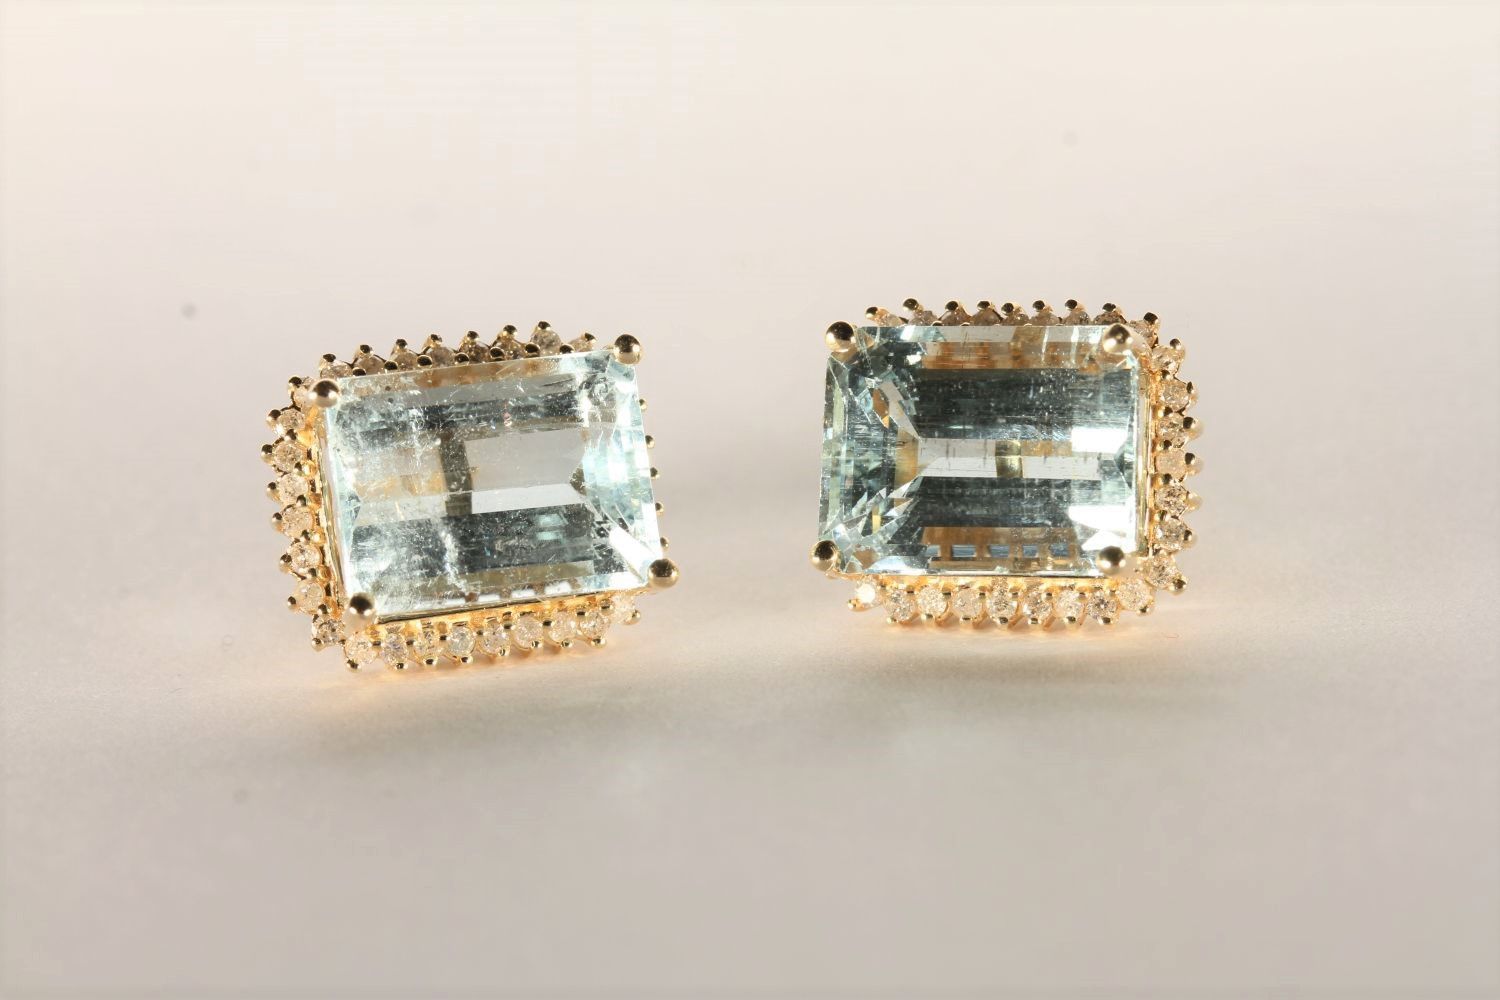 Pair of Aquamarine and Diamond Stud Earrings, set with 2 emerald cut light blue aquamarines